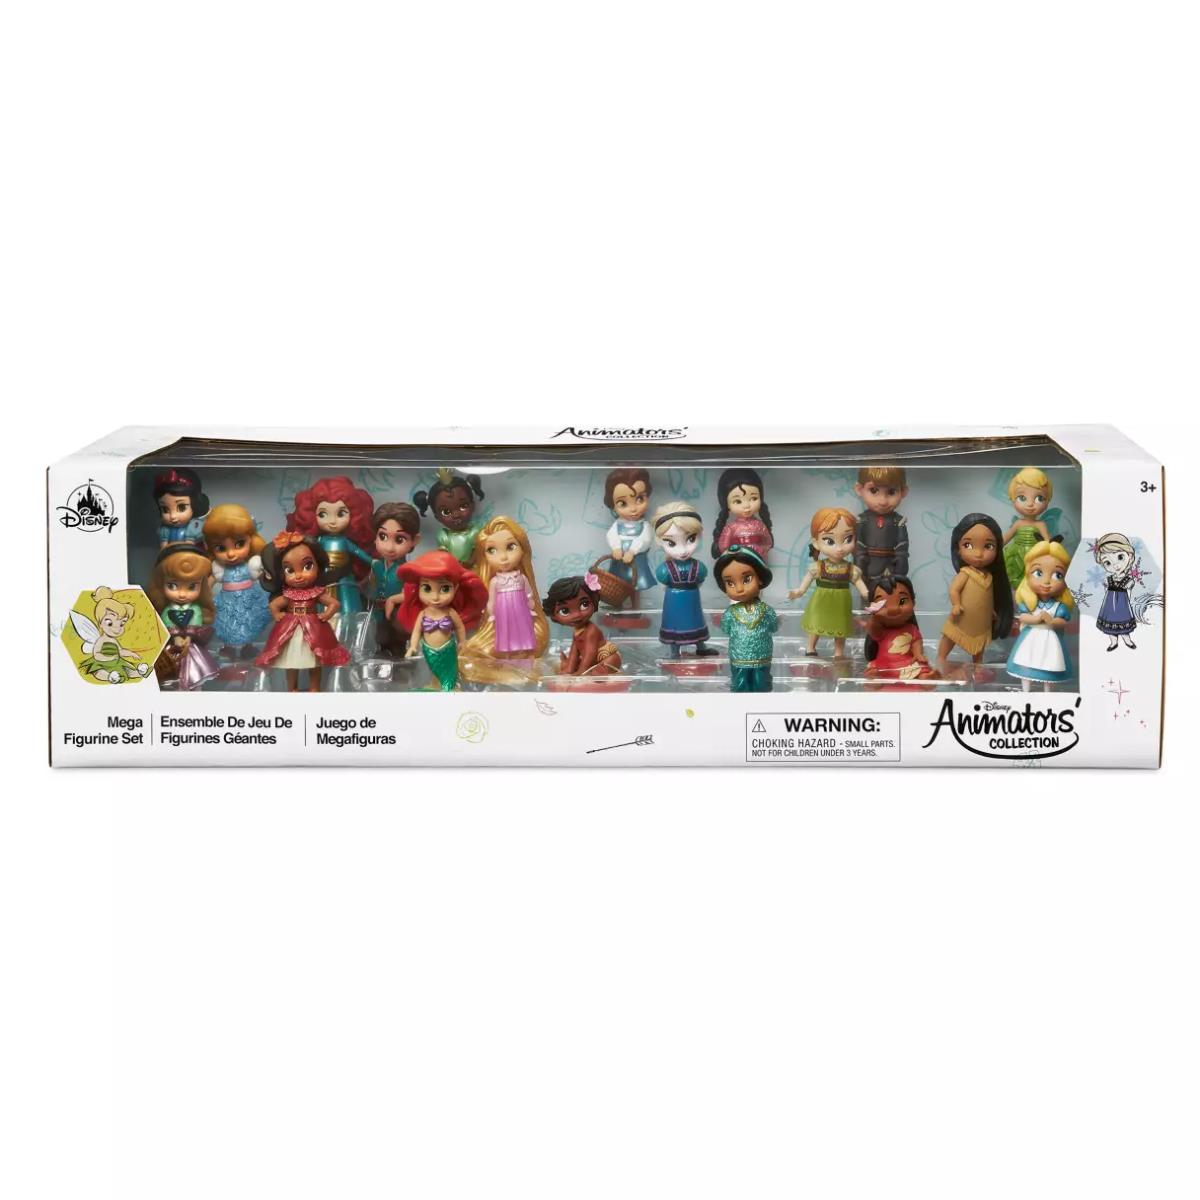 Animators Collection Mega Figurine Doll Play Set Disney Princess